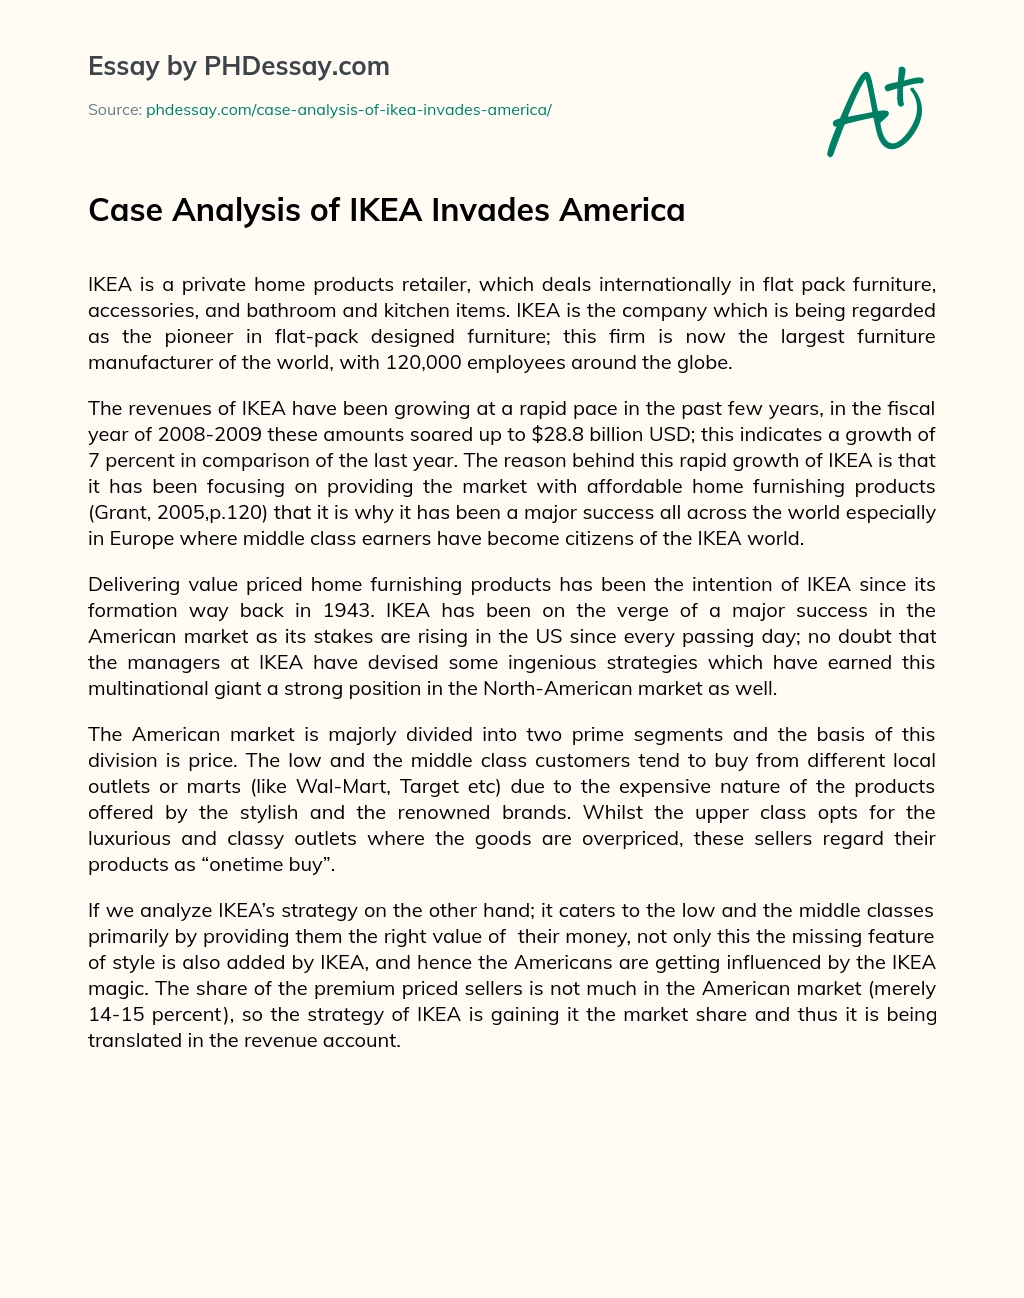 Case Analysis of IKEA Invades America essay